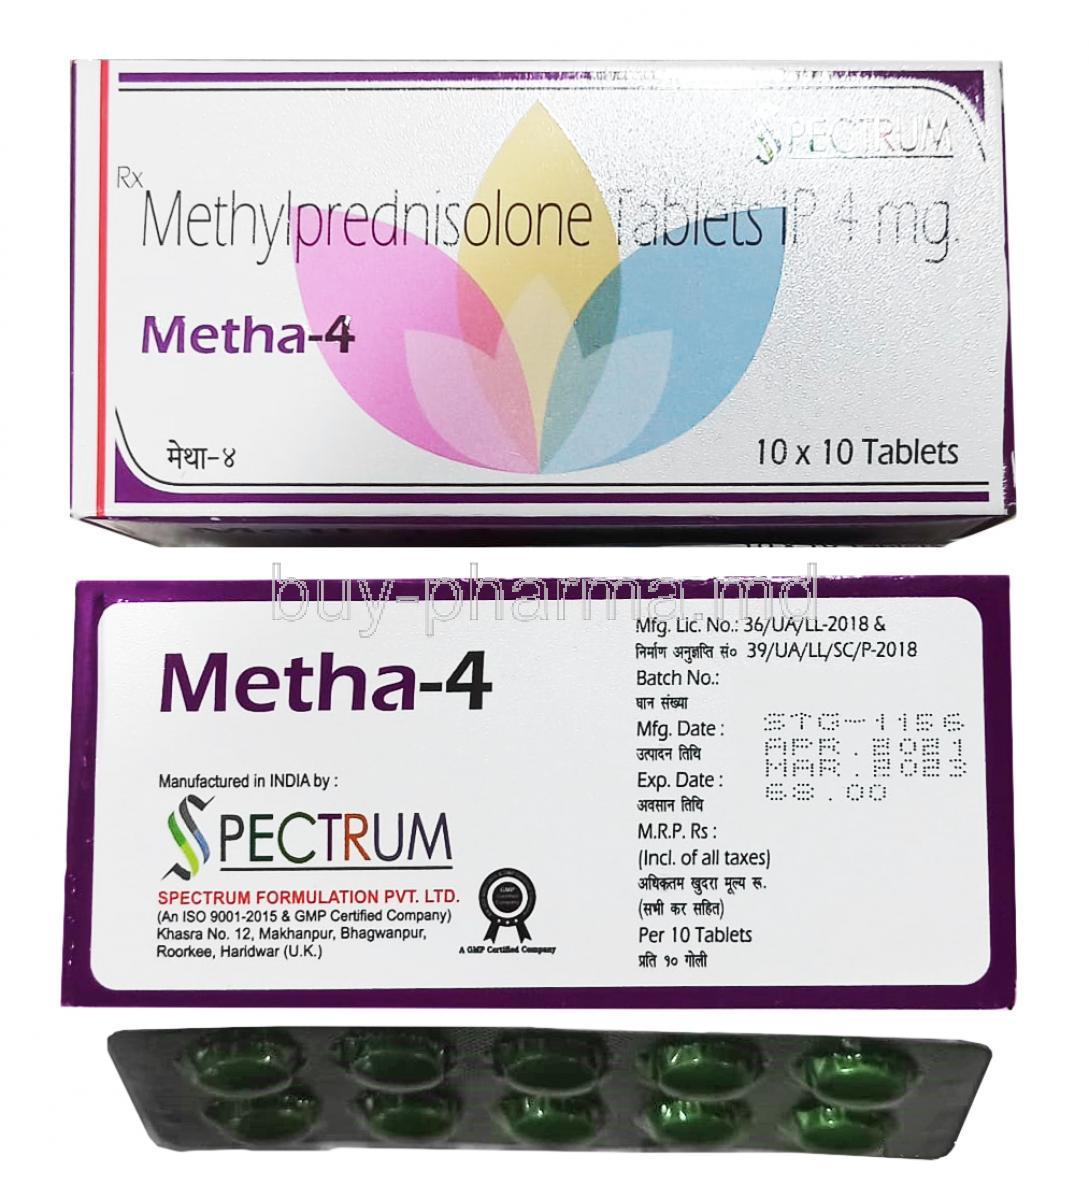 Metha, Methylprednisolone 4mg box and tablet